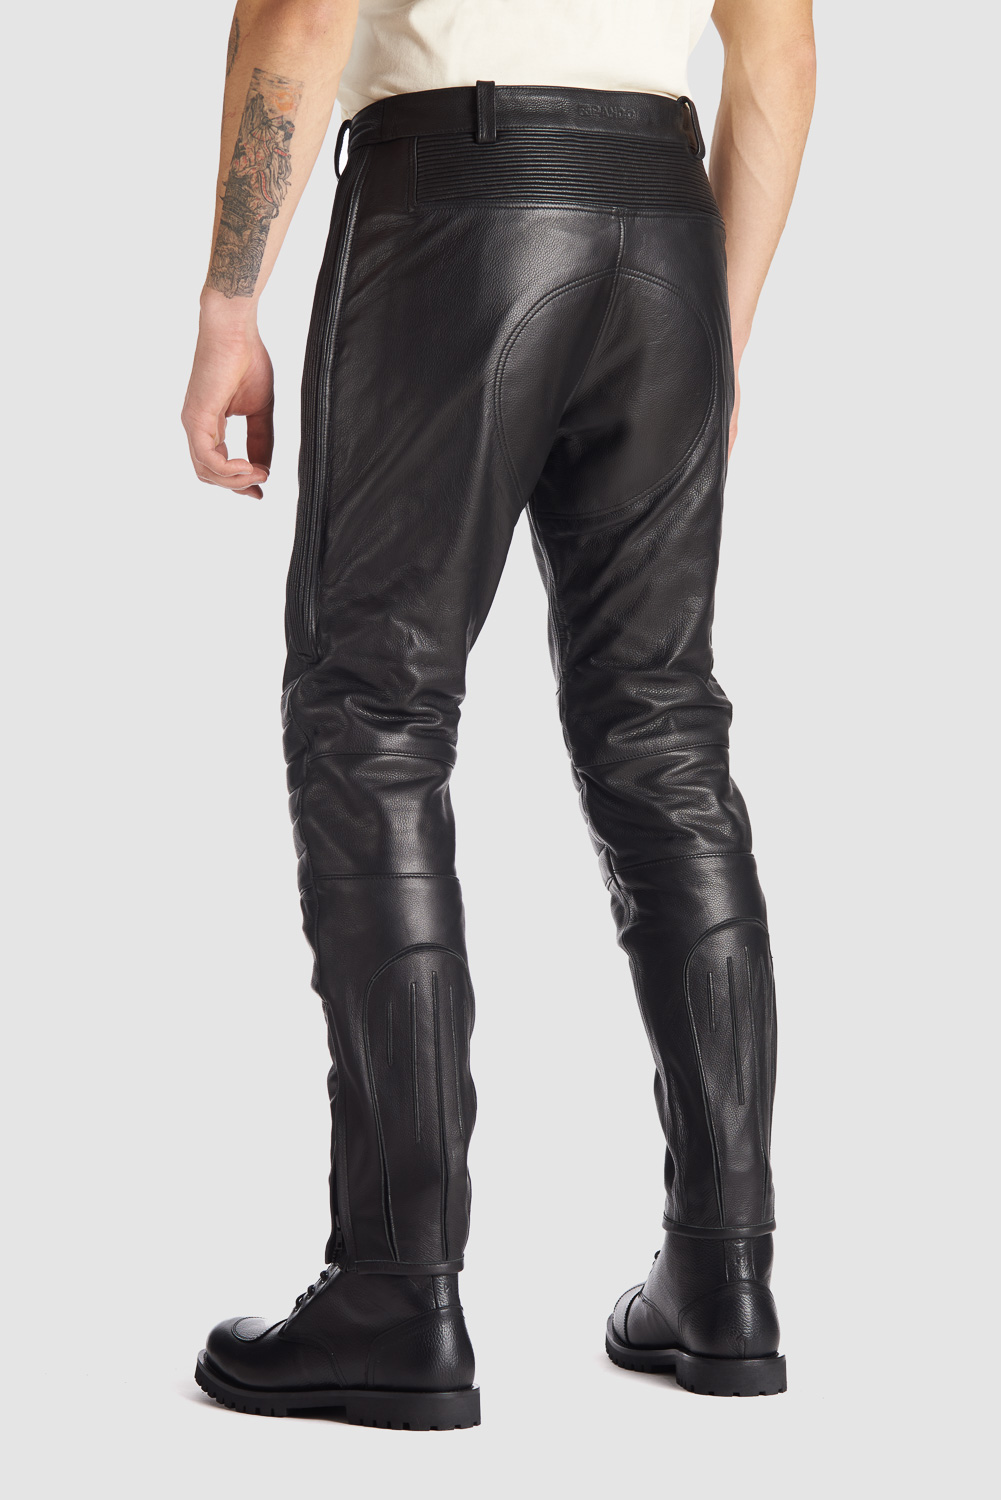 KATANA SLIM BLACK - Motorcycle Men's Leather Pants • Pando Moto